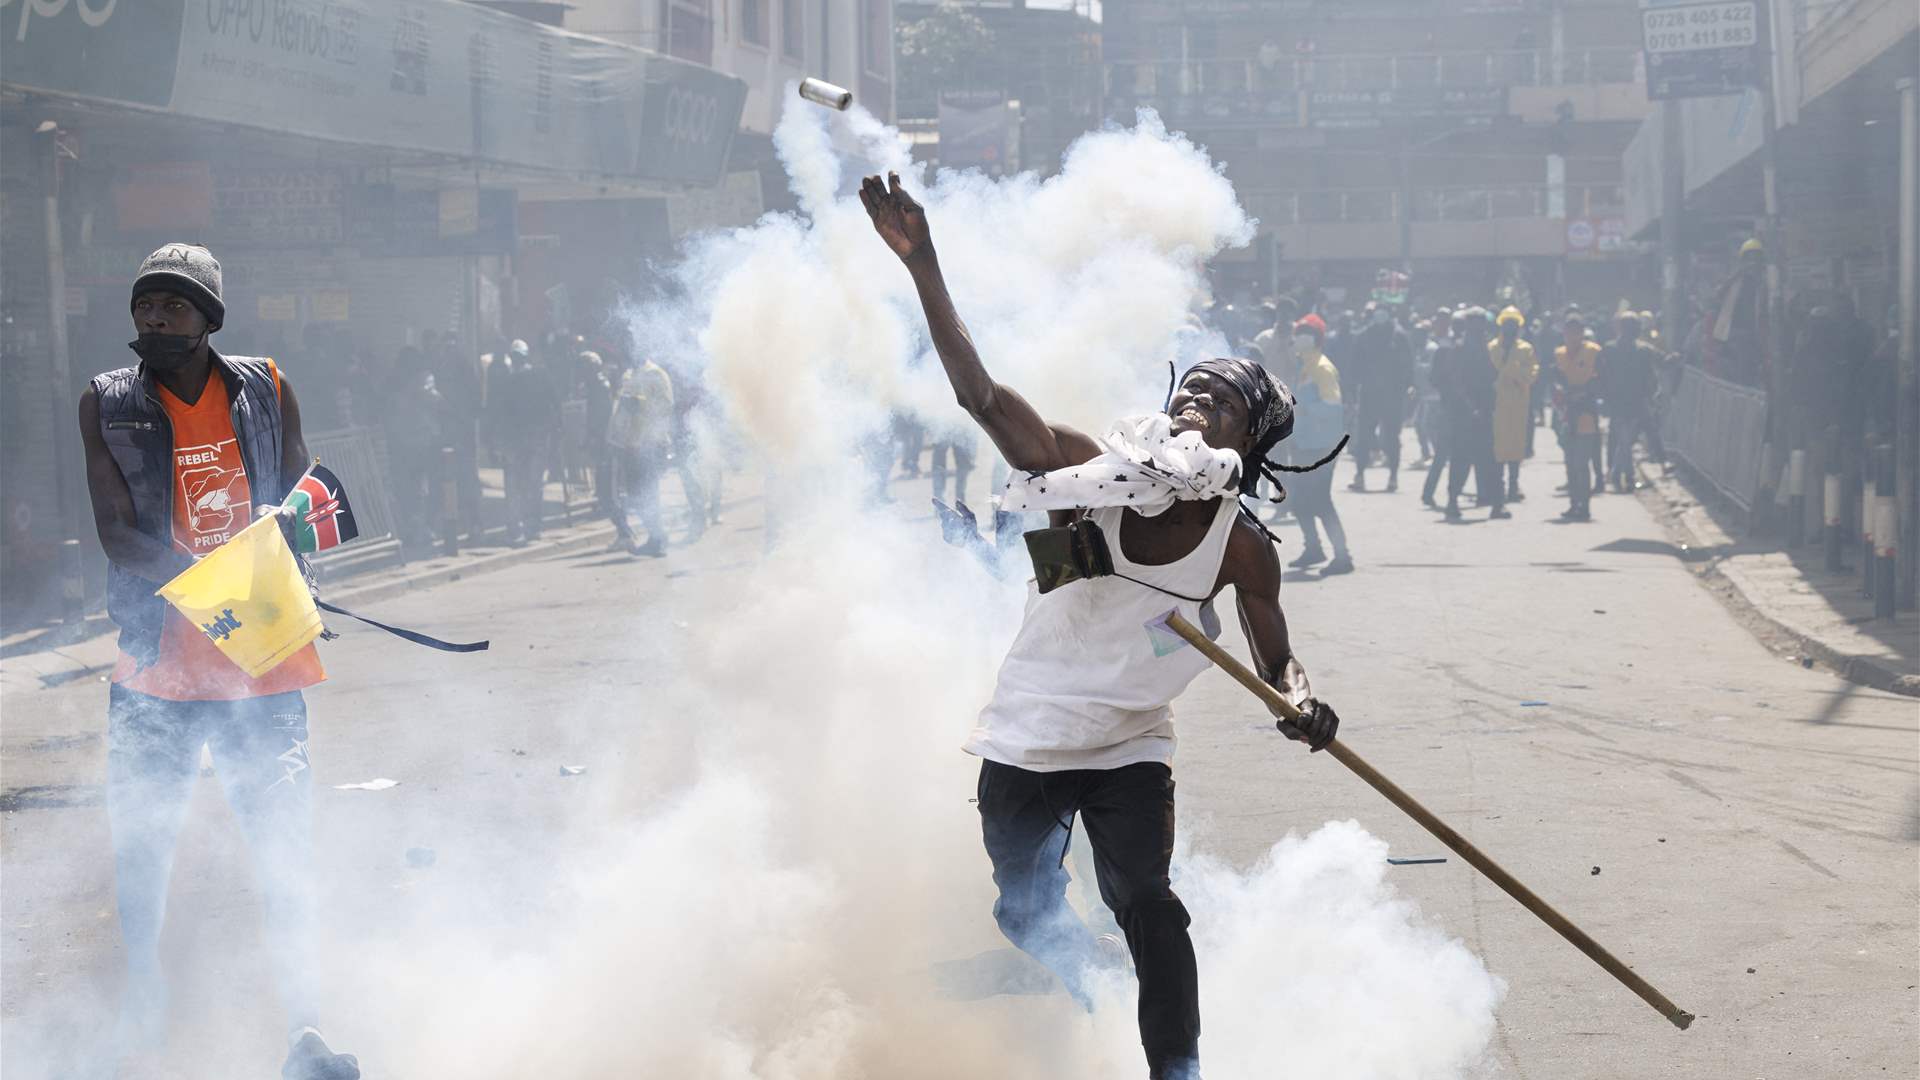 Kenya police kill protester near parliament: Rights group says 